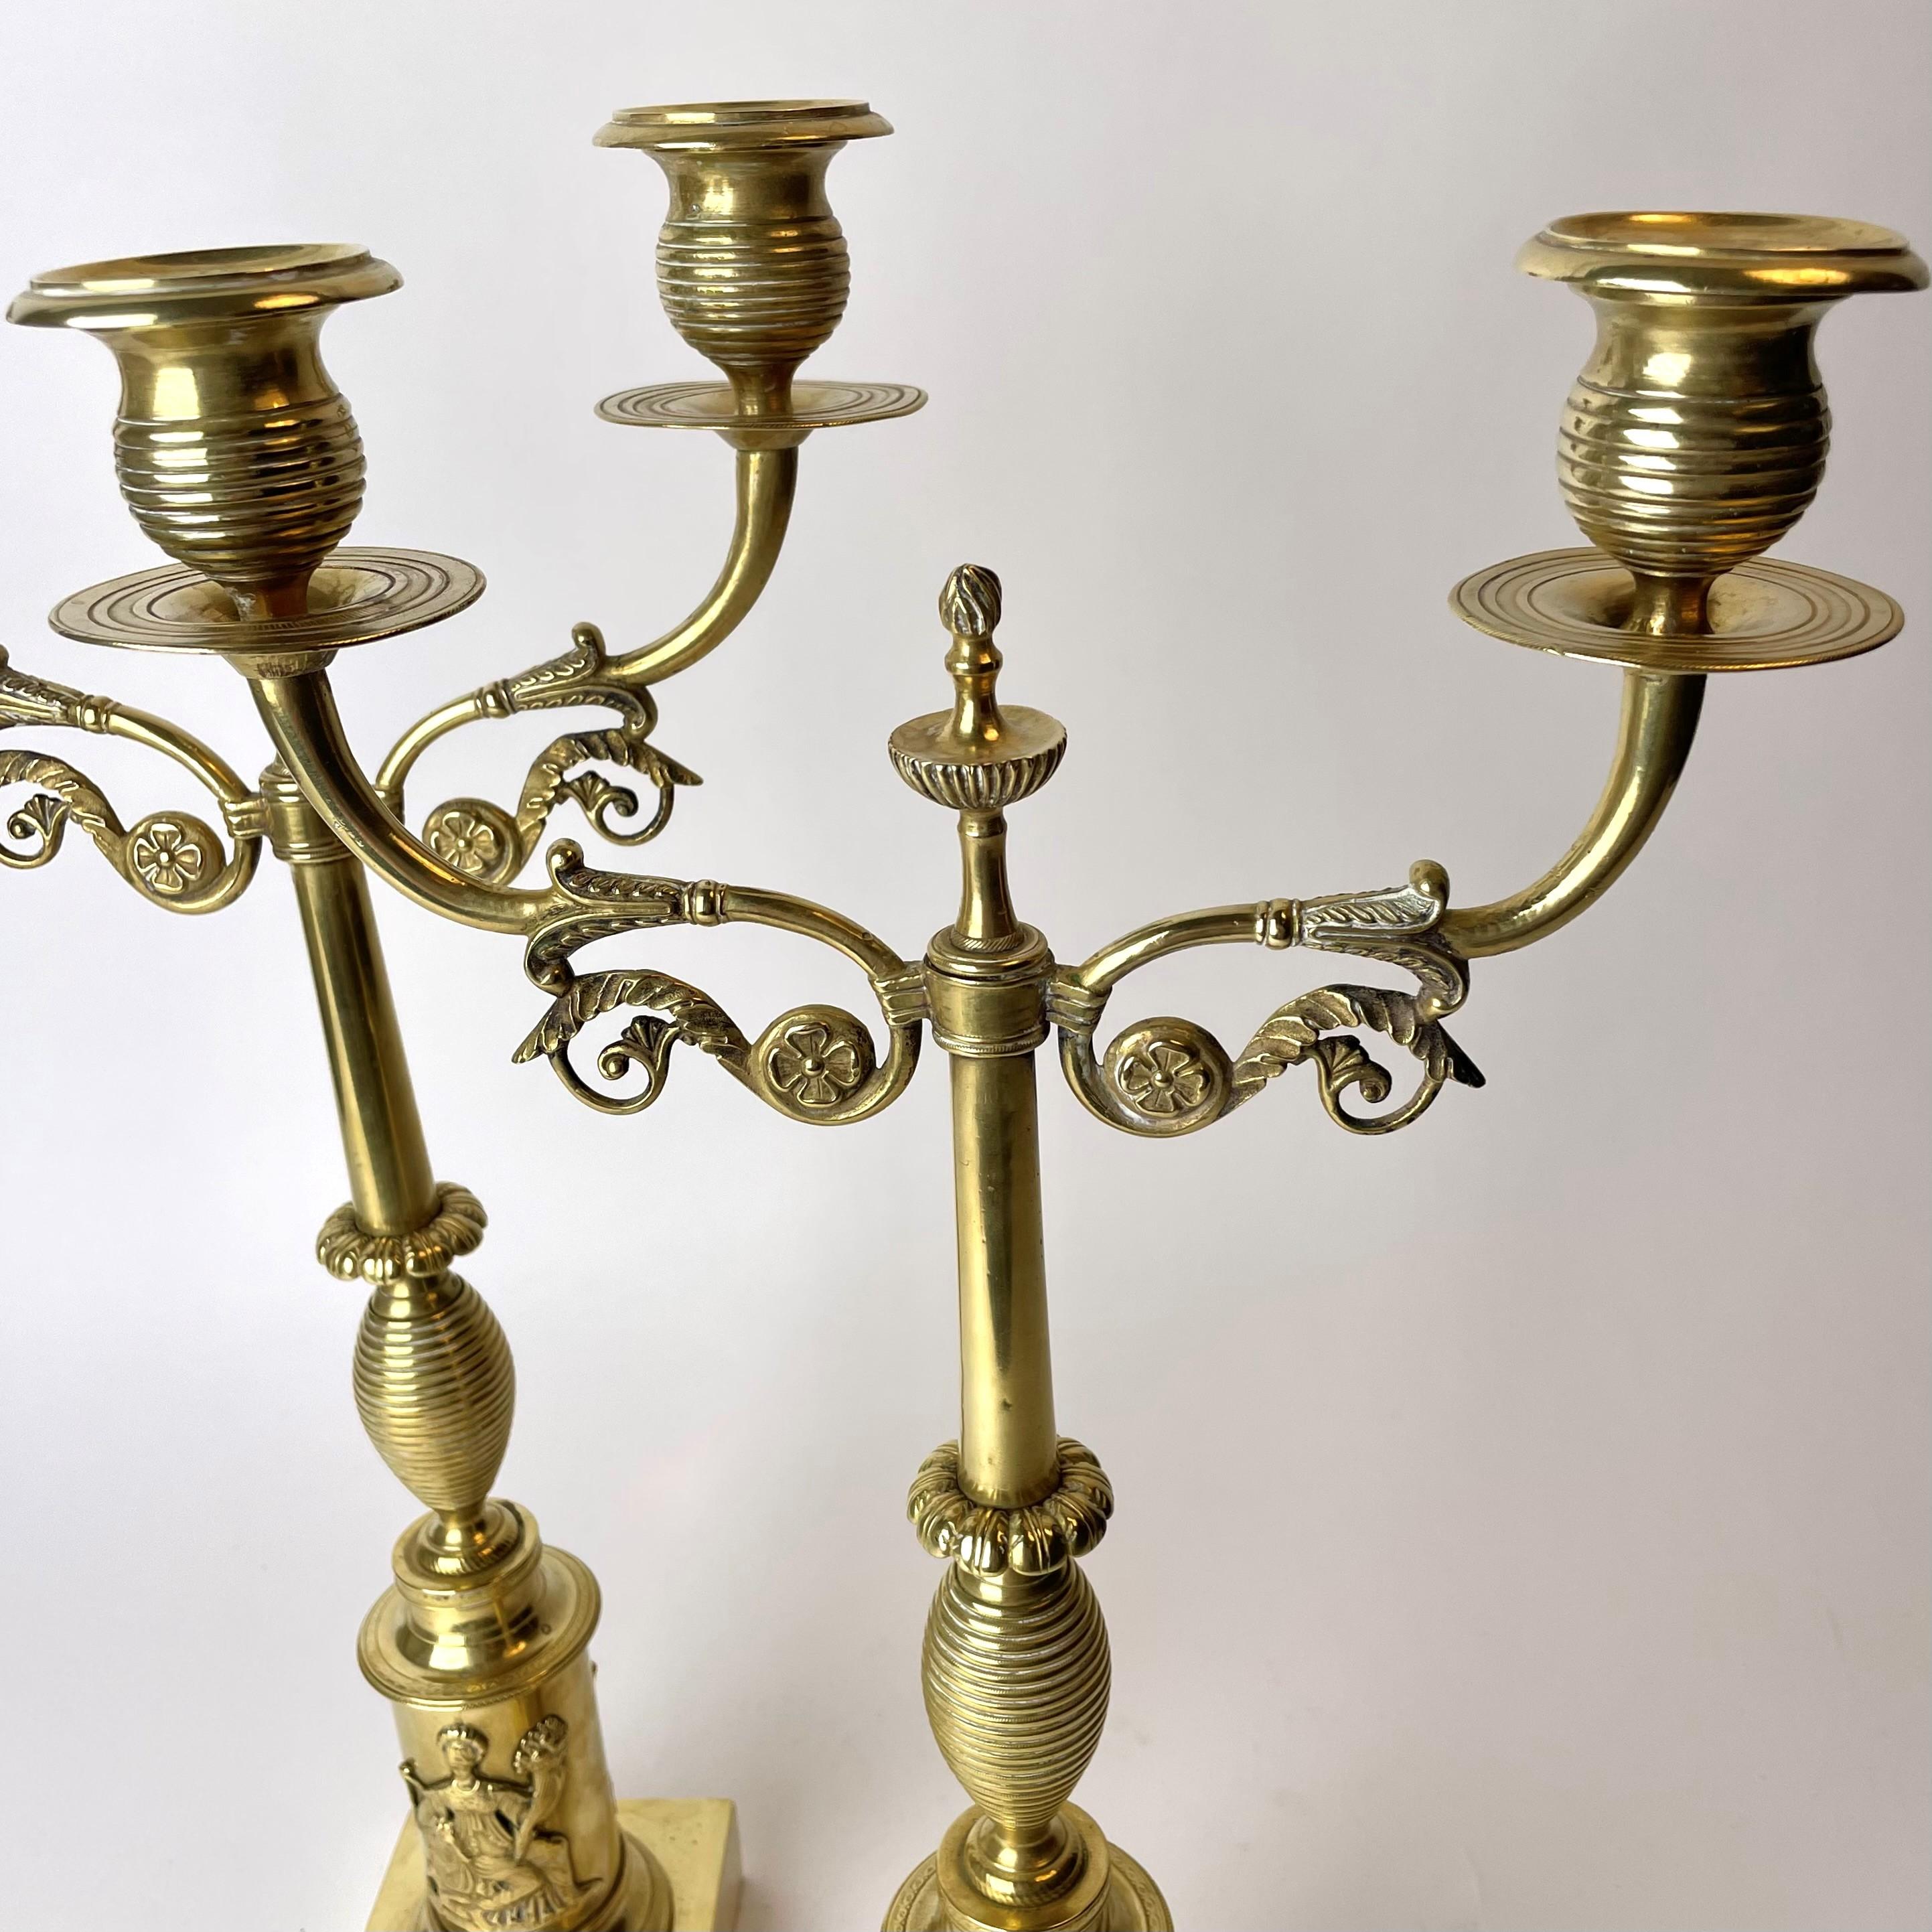 Brass Elegant Pair of Candelabras in Swedish Empire 'Karl Johan' from the 1820s